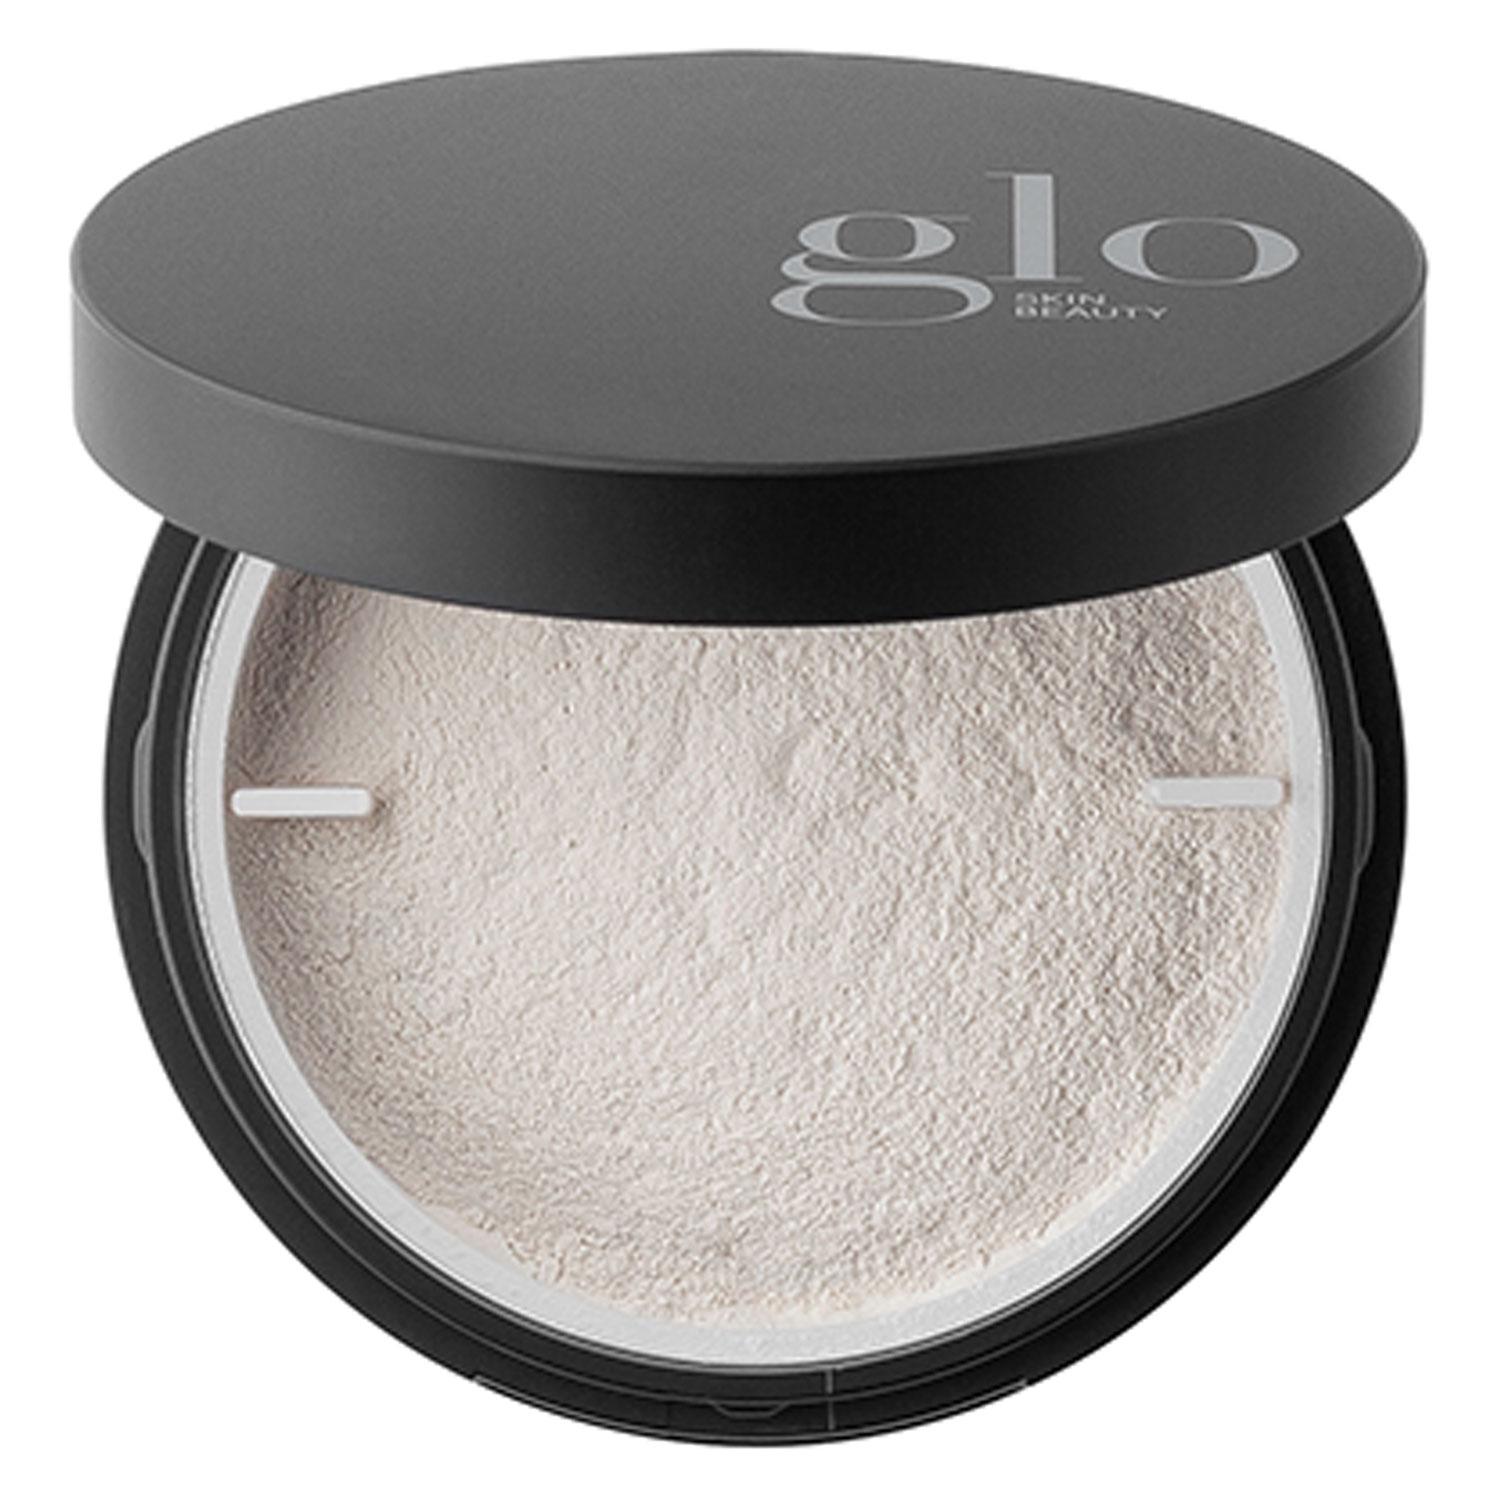 Glo Skin Beauty Powder - Luminous Setting Powder Translucent